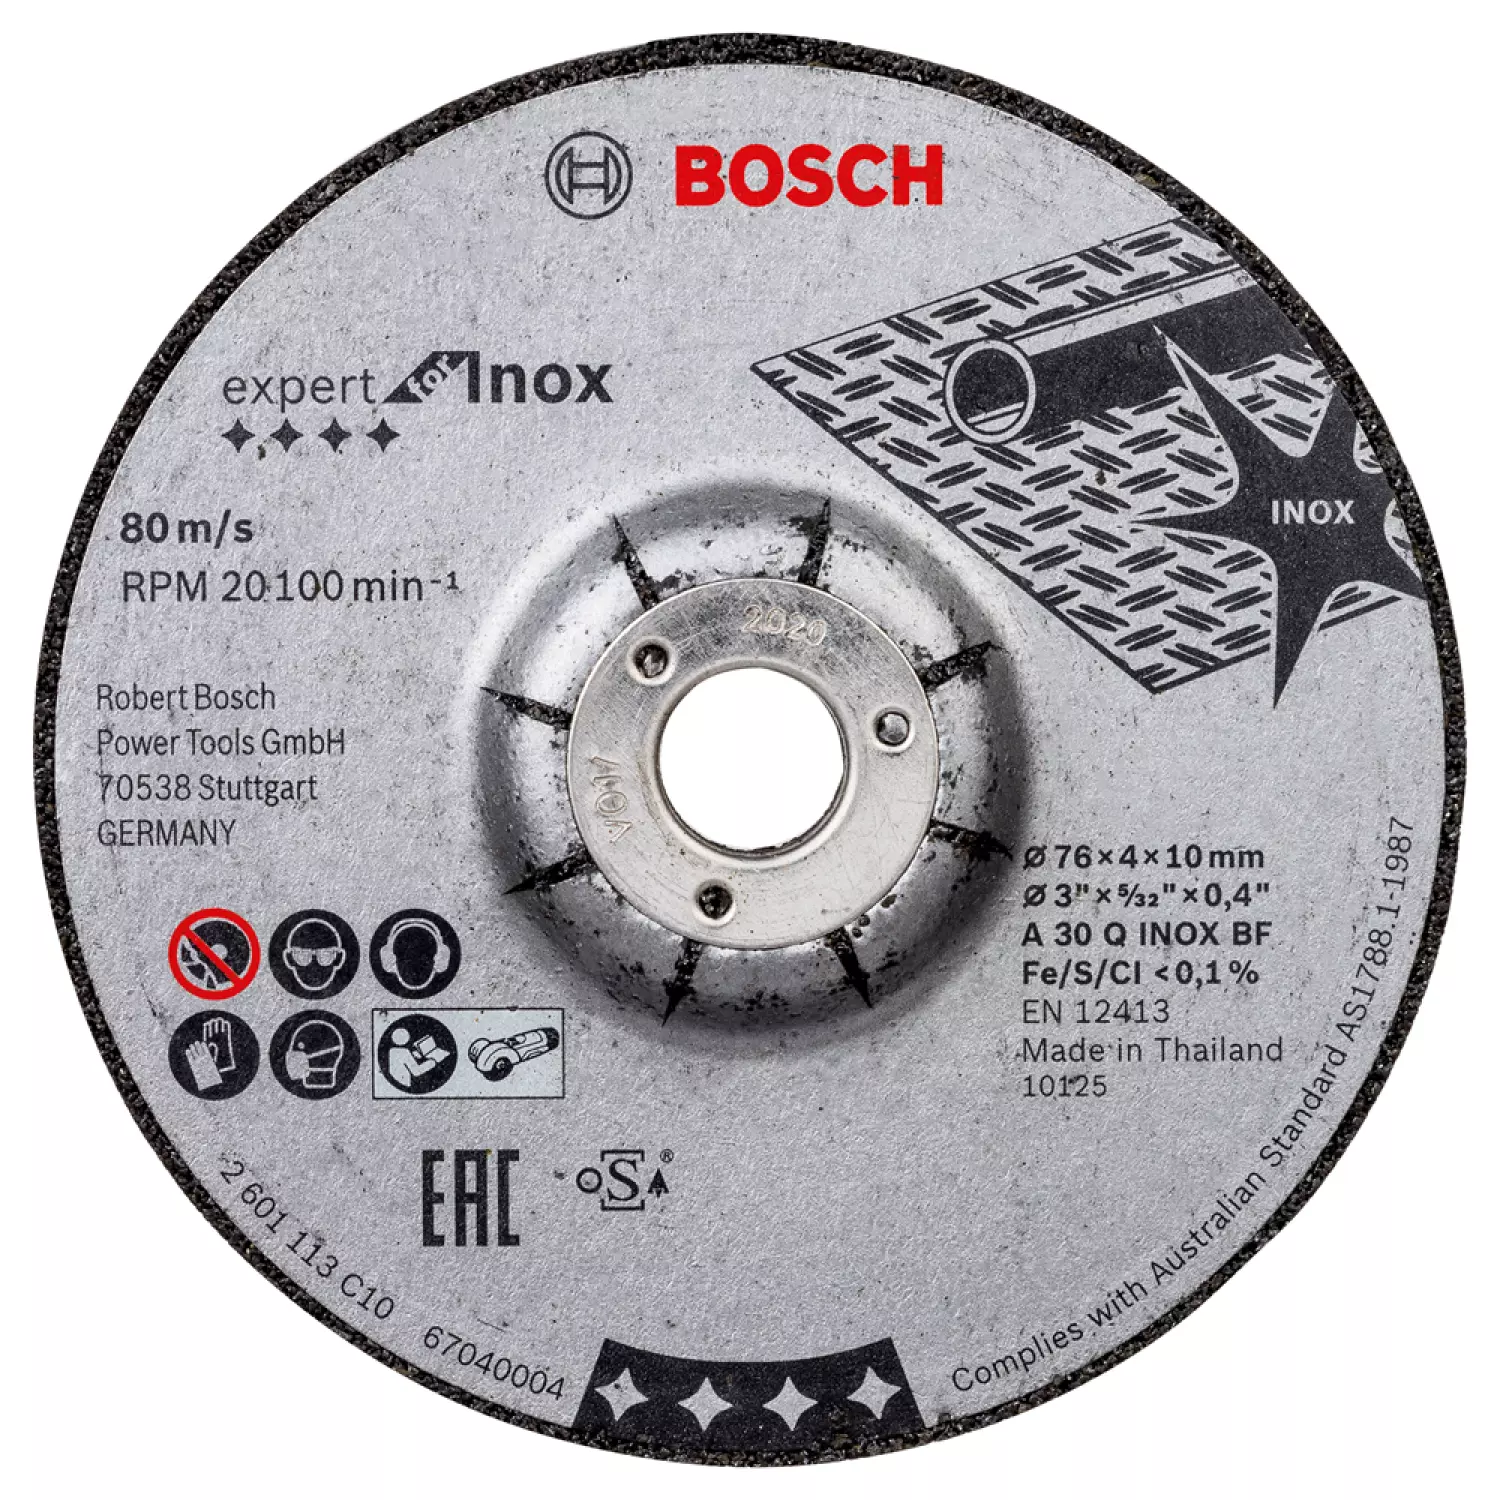 Bosch 2608601705 - Meule à ébarber Expert for Inox A 30 Q, 76 x 4 x 10 mm 2x-image